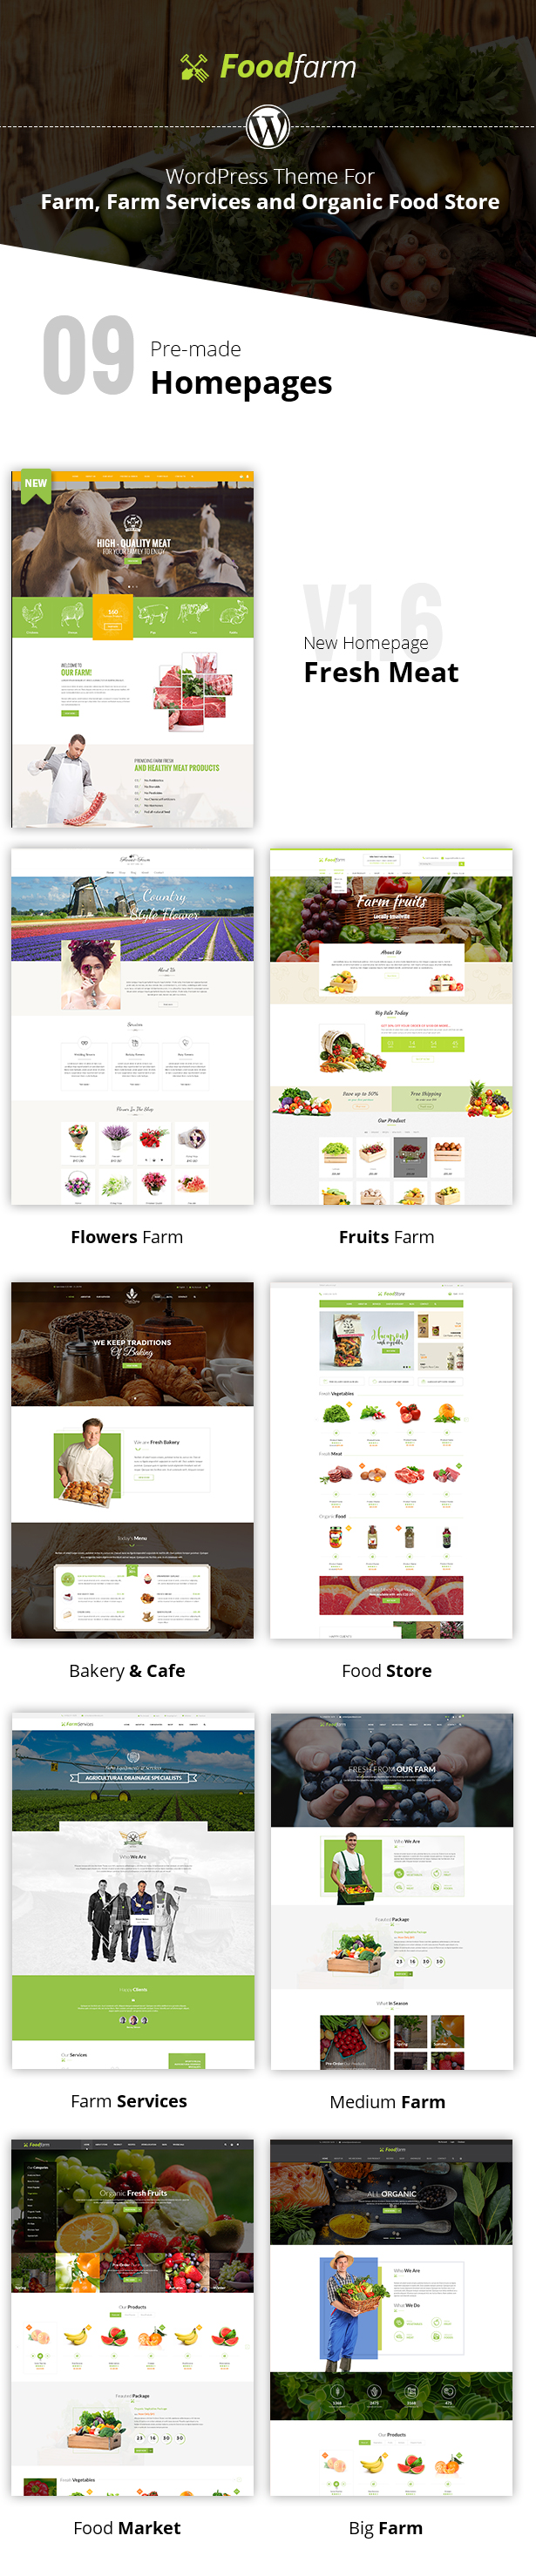 FoodFarm – WordPress Theme for Farm, Farm Services and Organic Food Store - 12